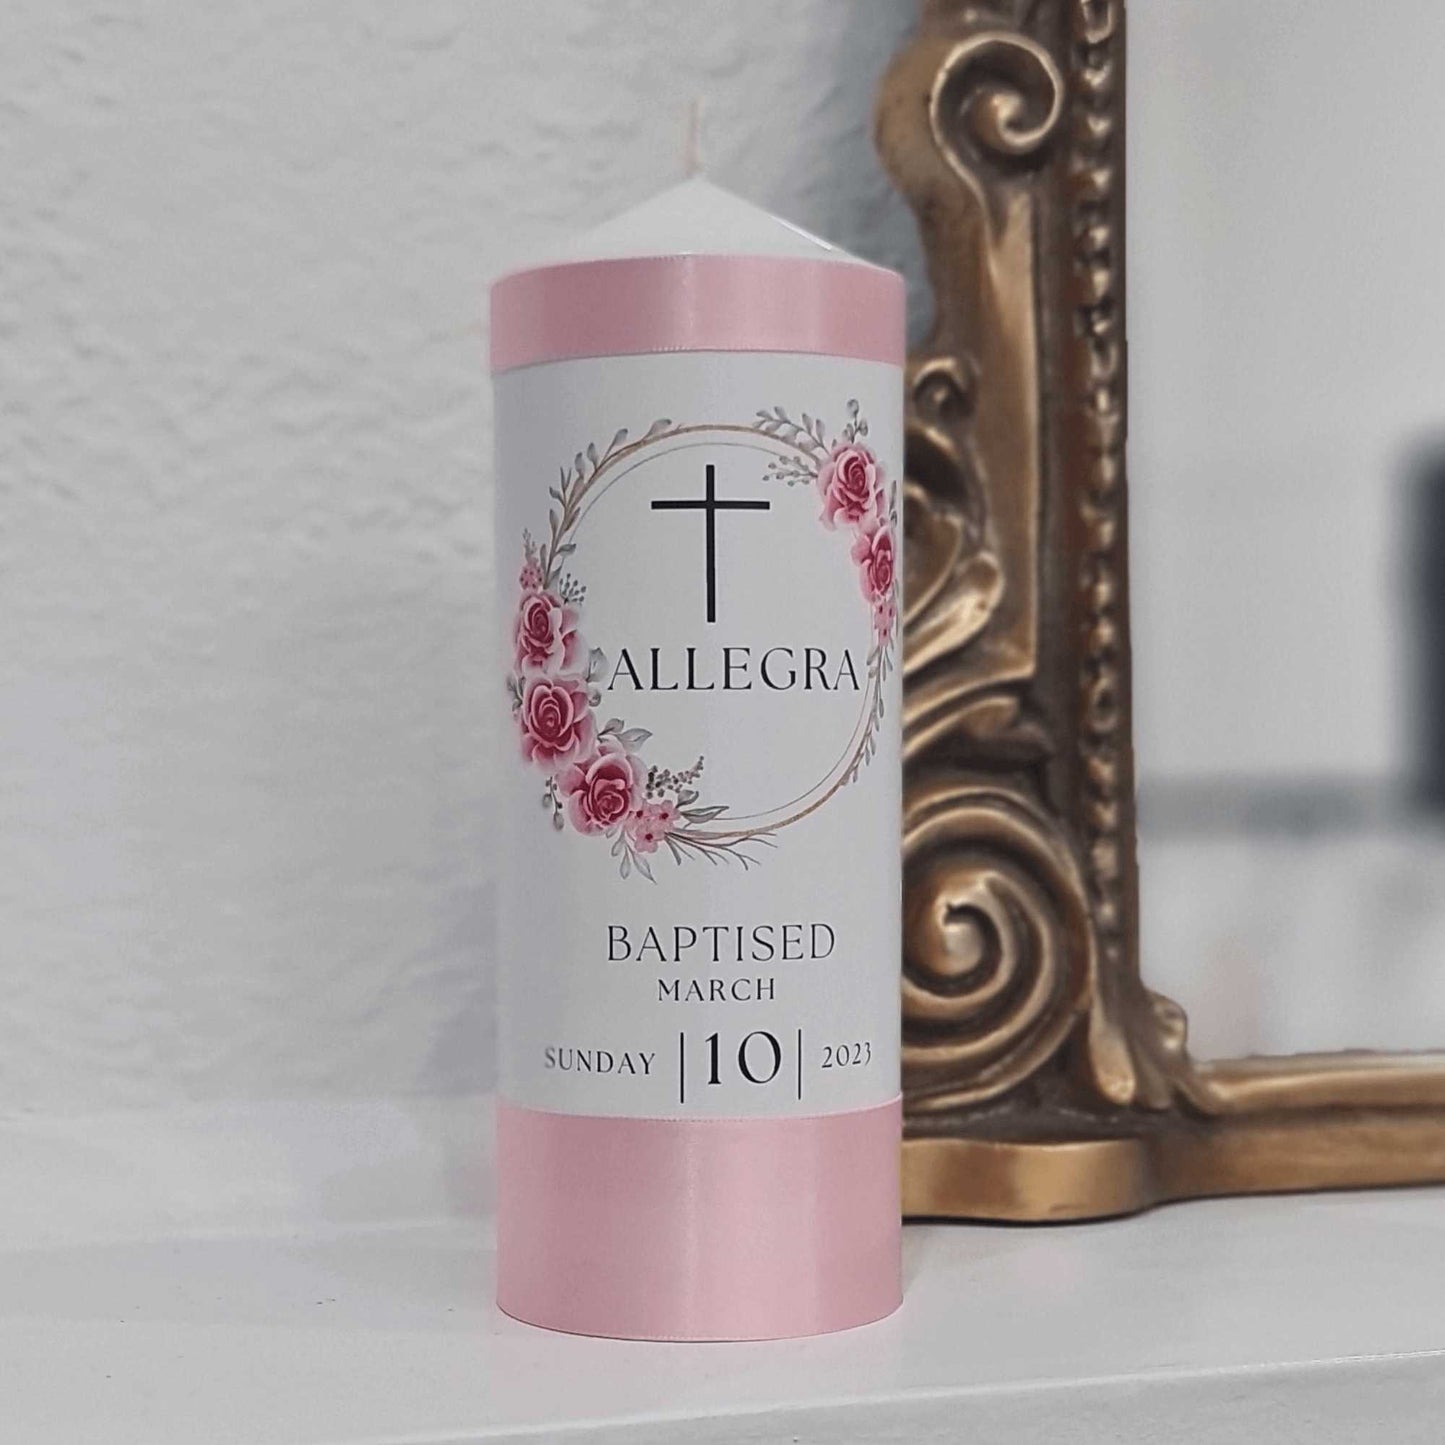 Allegra girls pink Christening or Baptism Candles